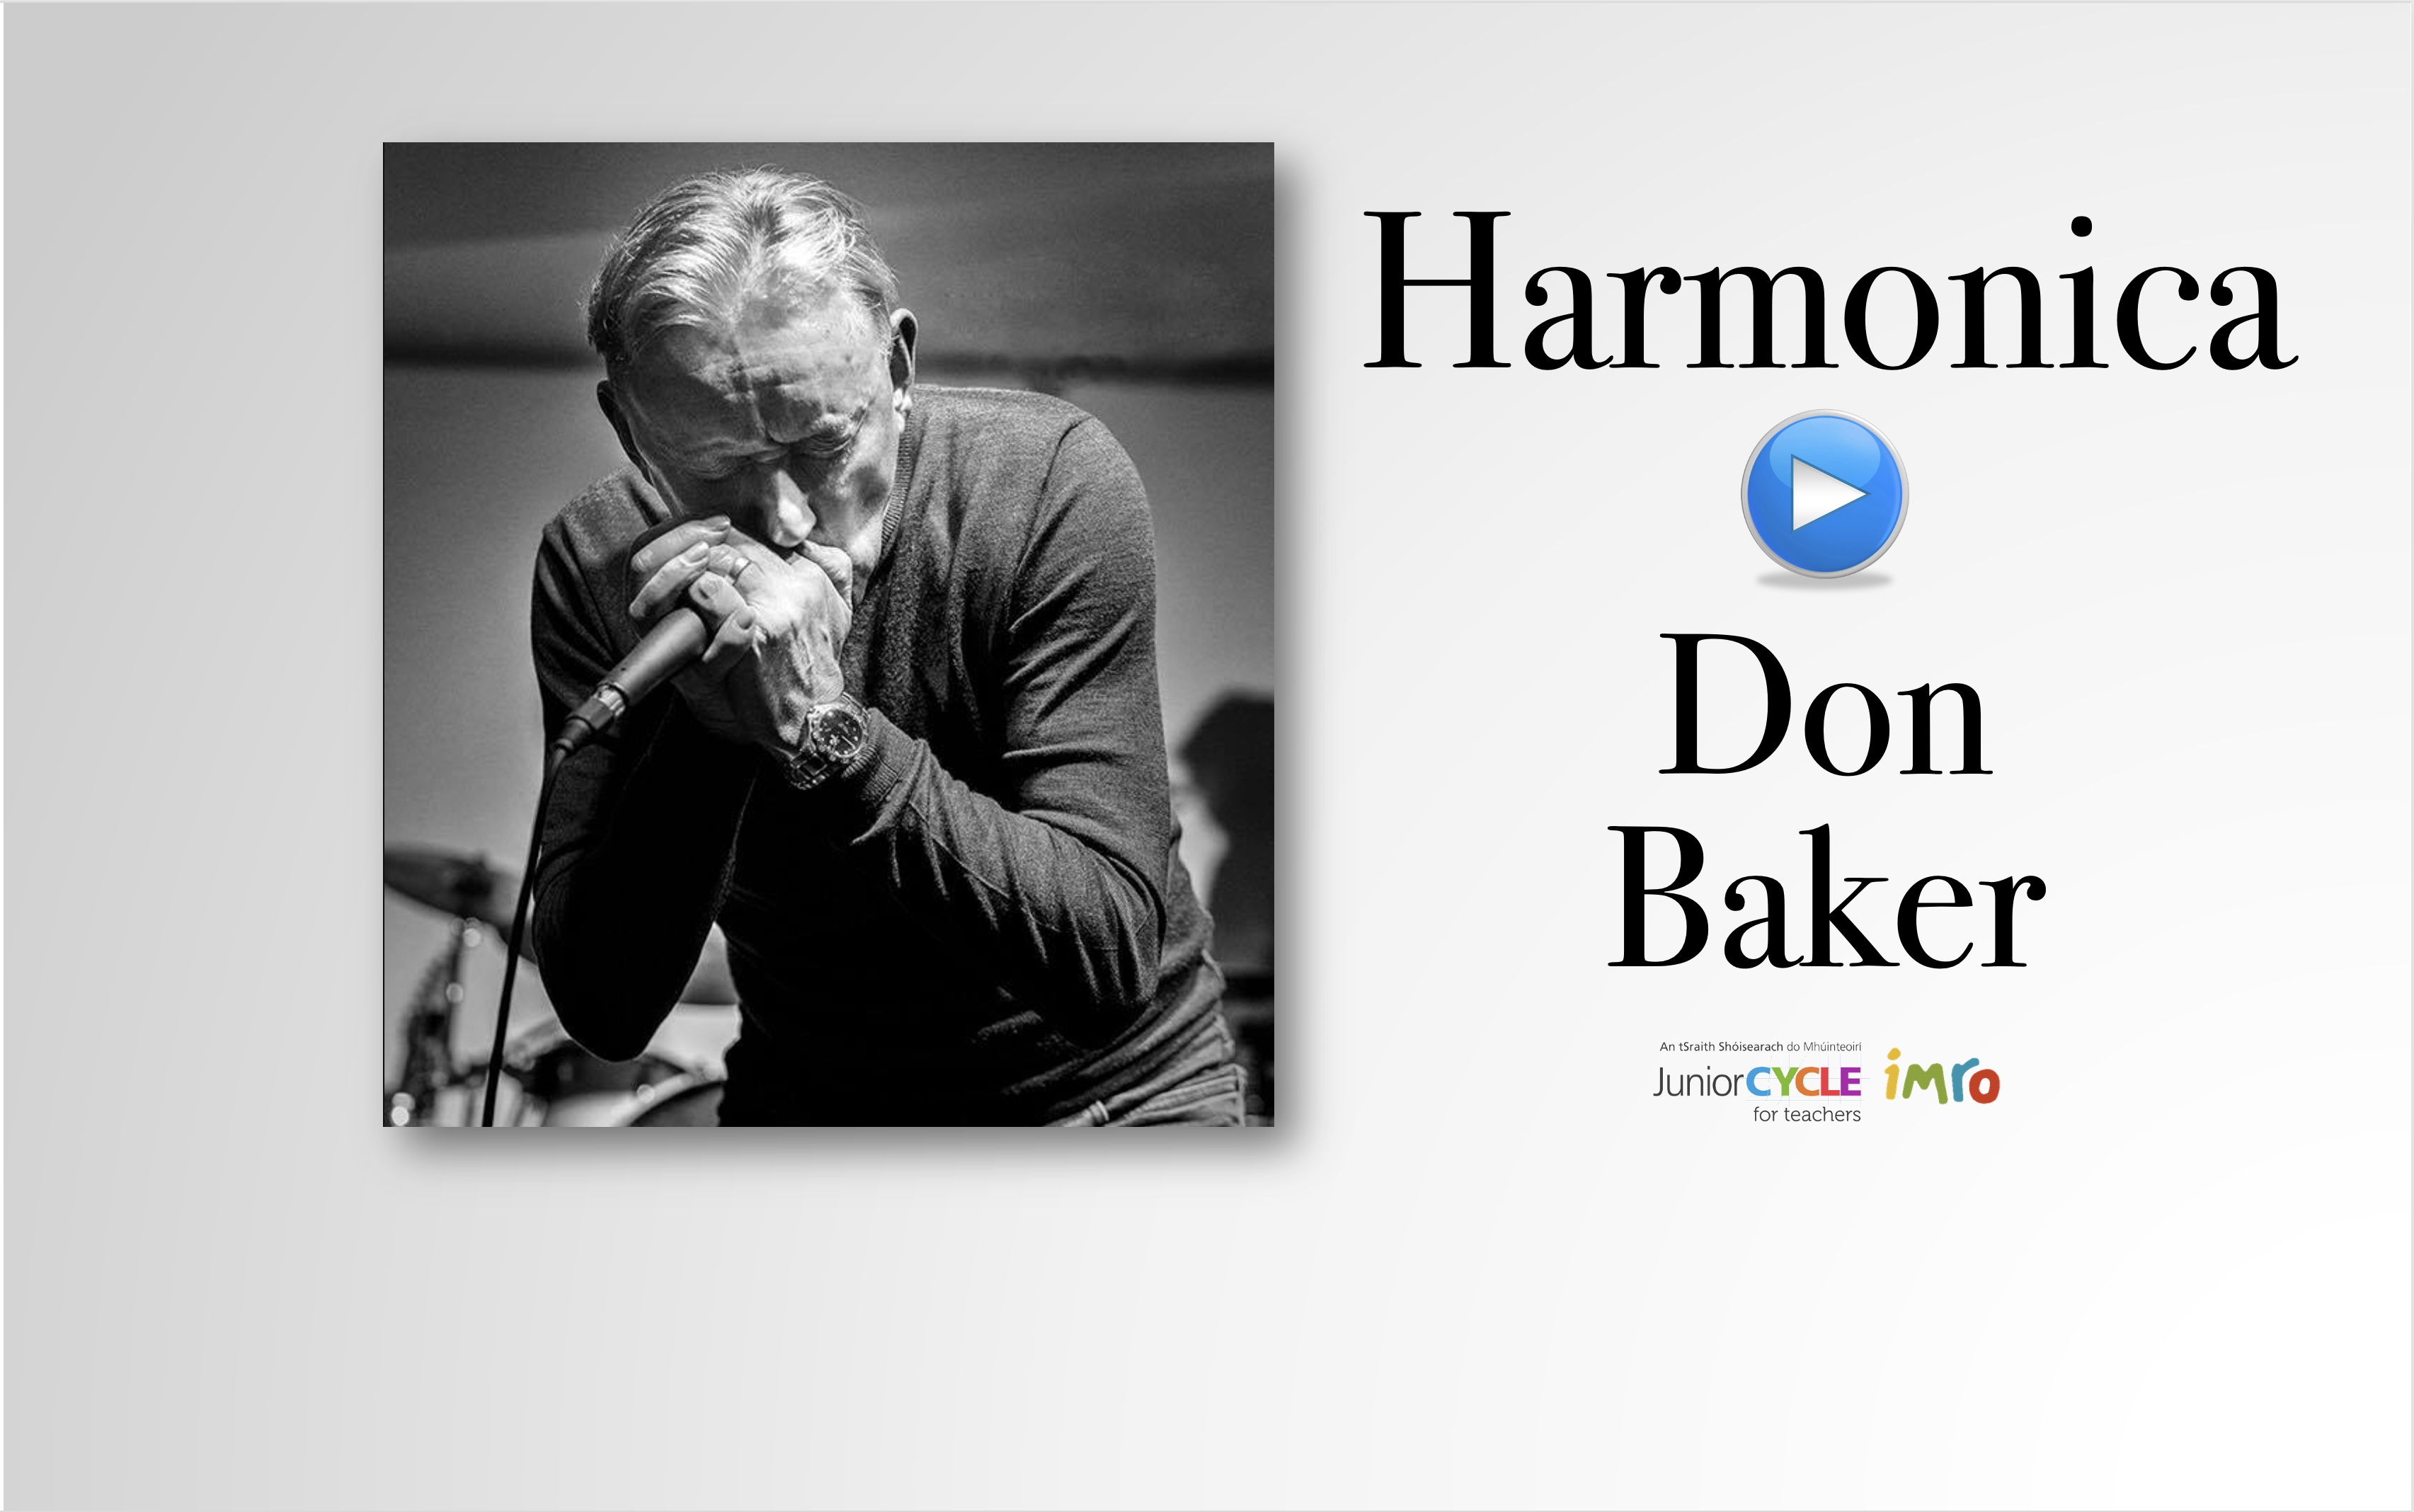 Meet the Harmonica